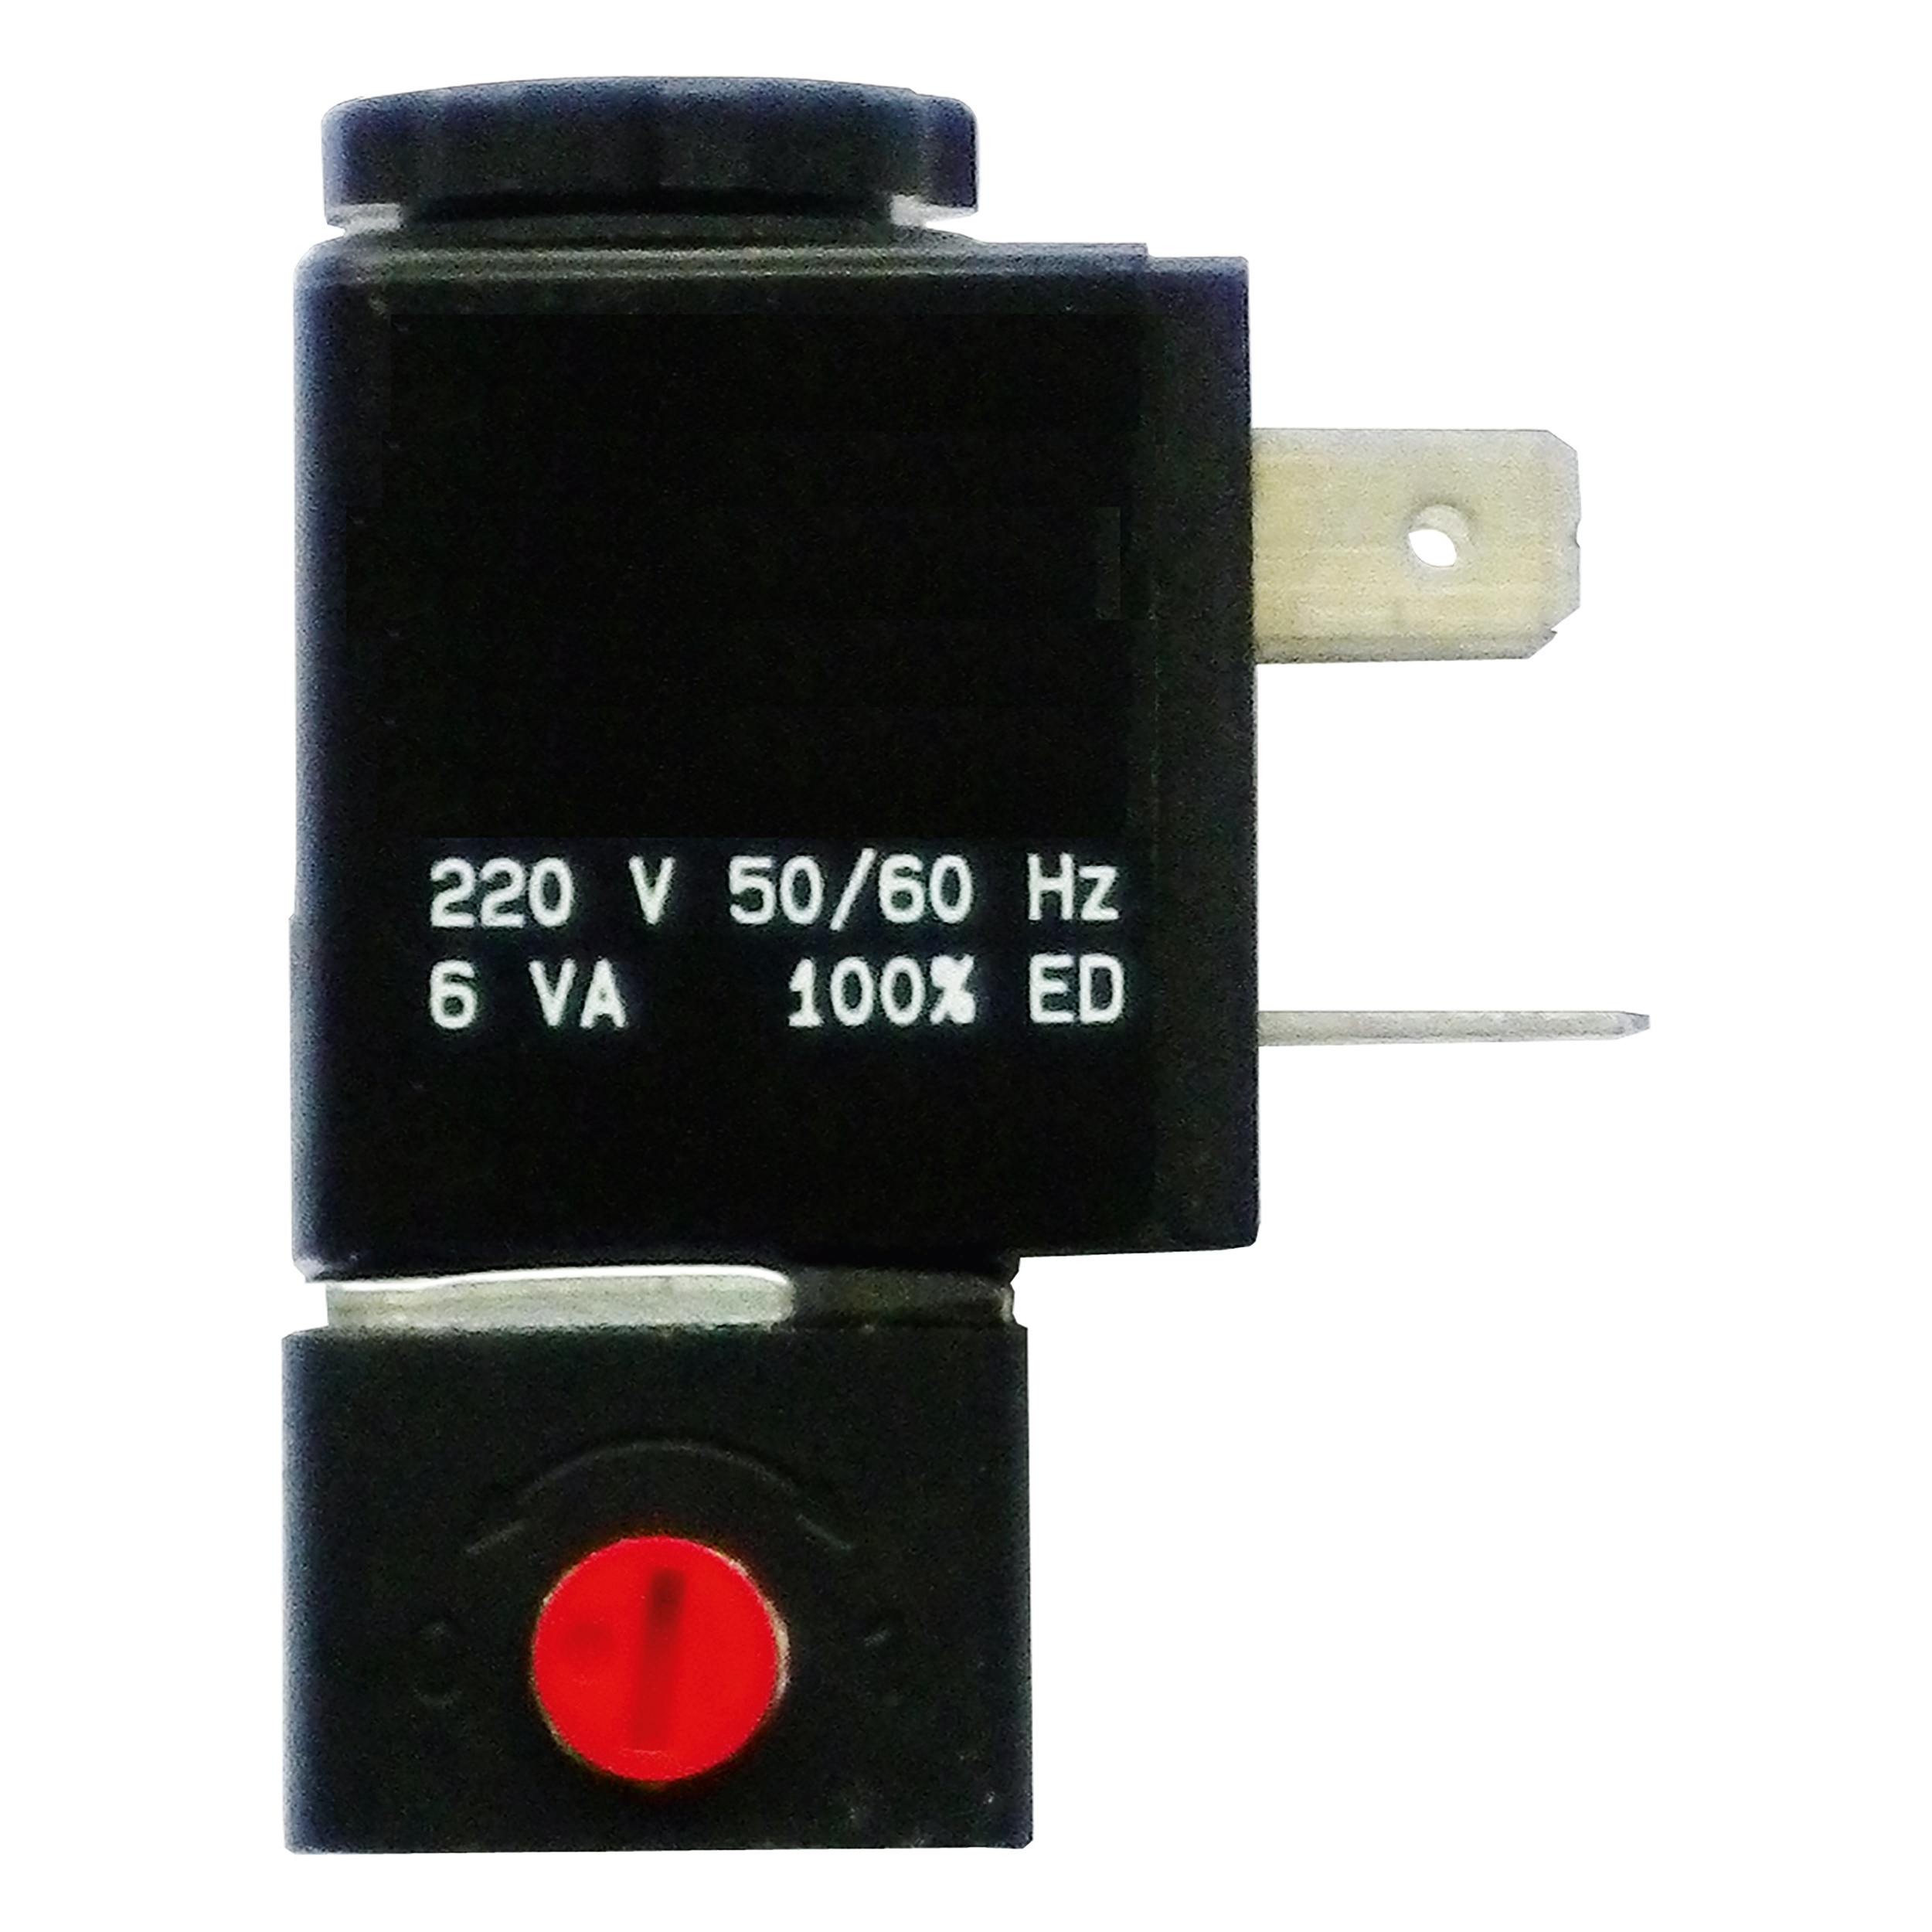 Magnetic valve variobloc, as a shut-off valve, voltage: 220 V AC/50 Hz, with rapid venting